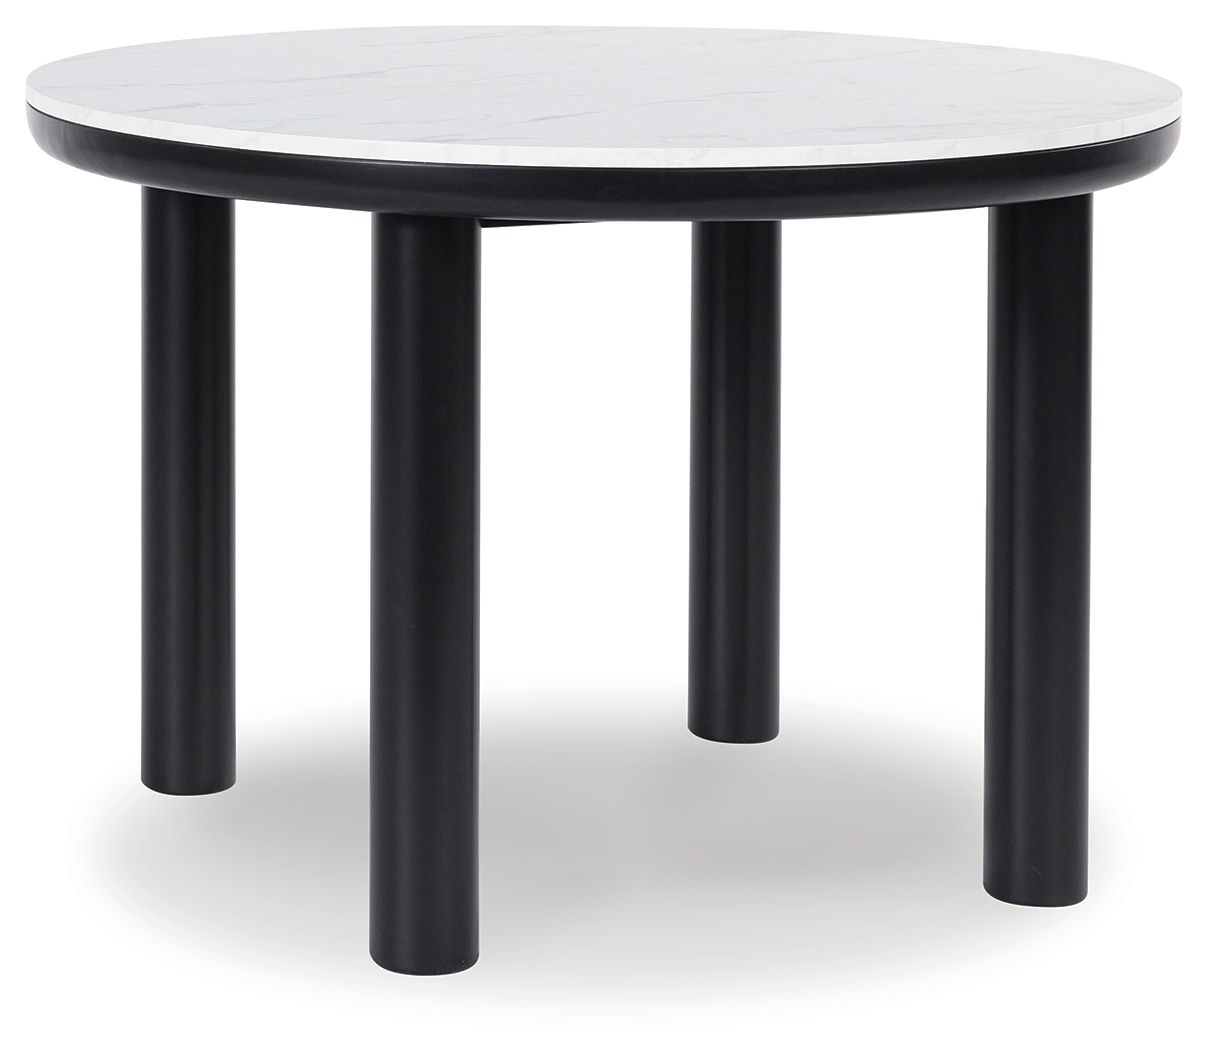 Xandrum - Black - Round Dining Room Table - Tony's Home Furnishings